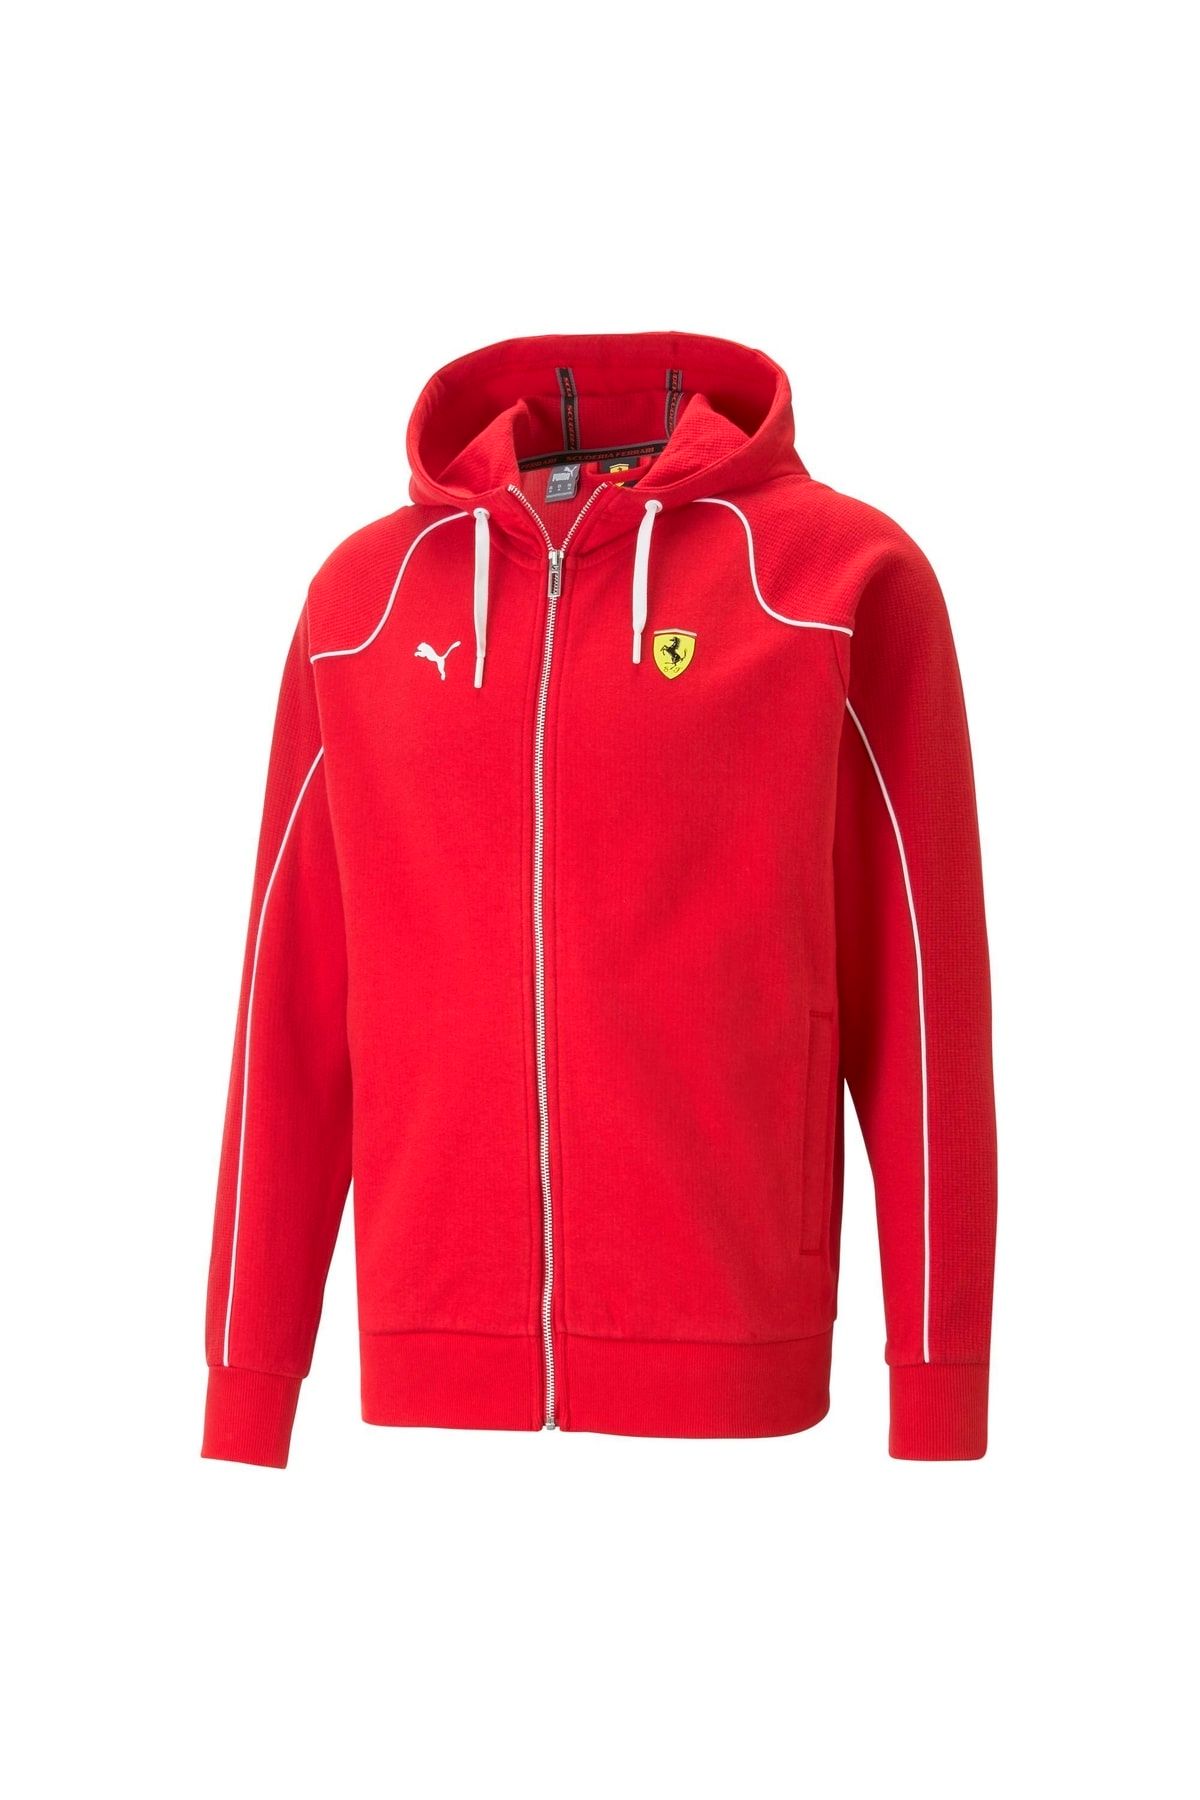 Puma Ferrari Race Hooded Sweat Jacket - Erkek Kırmızı Eşofman Üstü & Spor Ceket